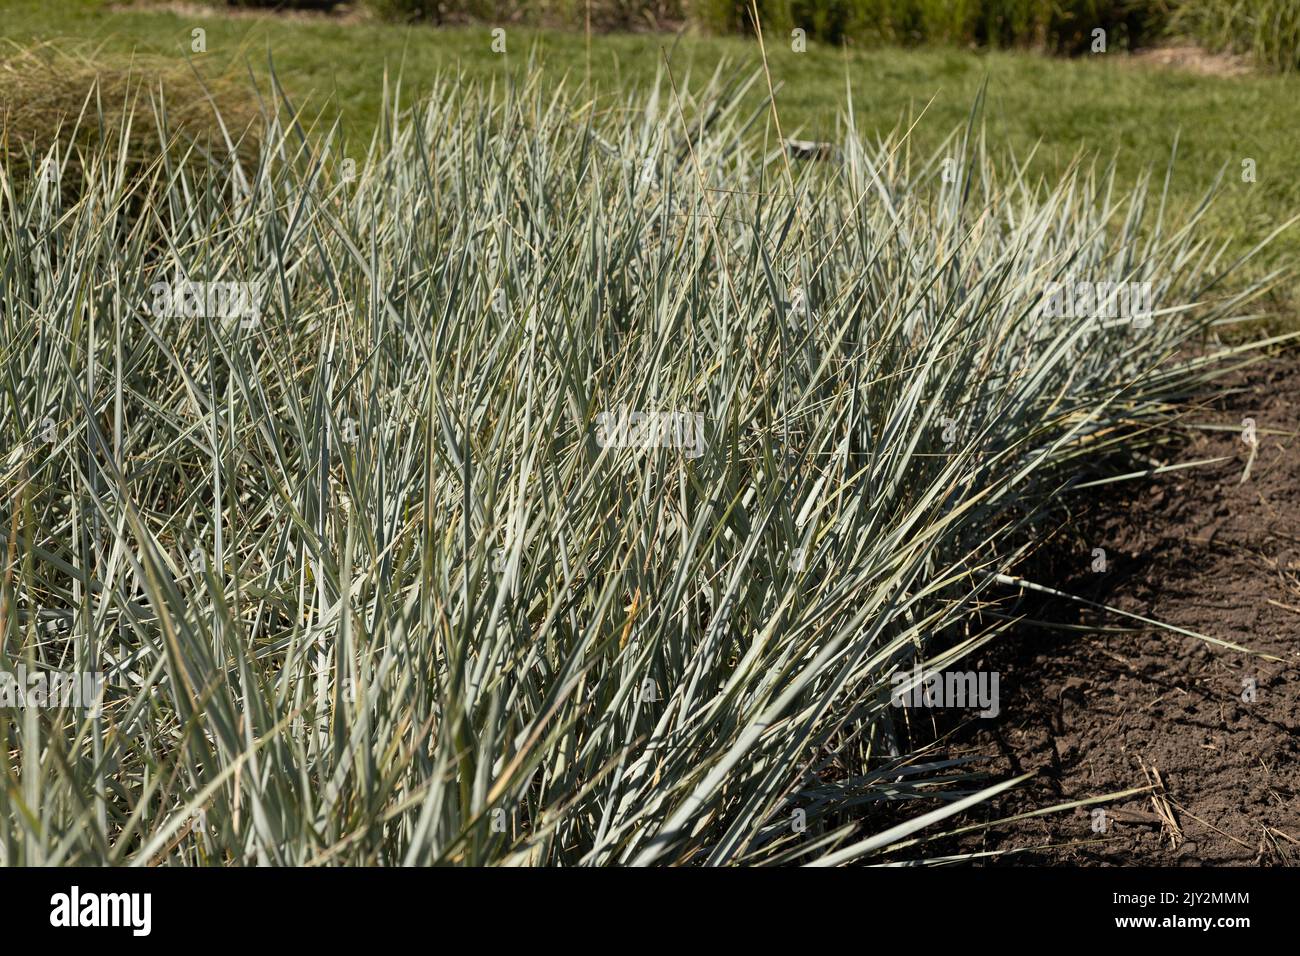 Leymus arenarius 'Blue Dune' grass. Stock Photo